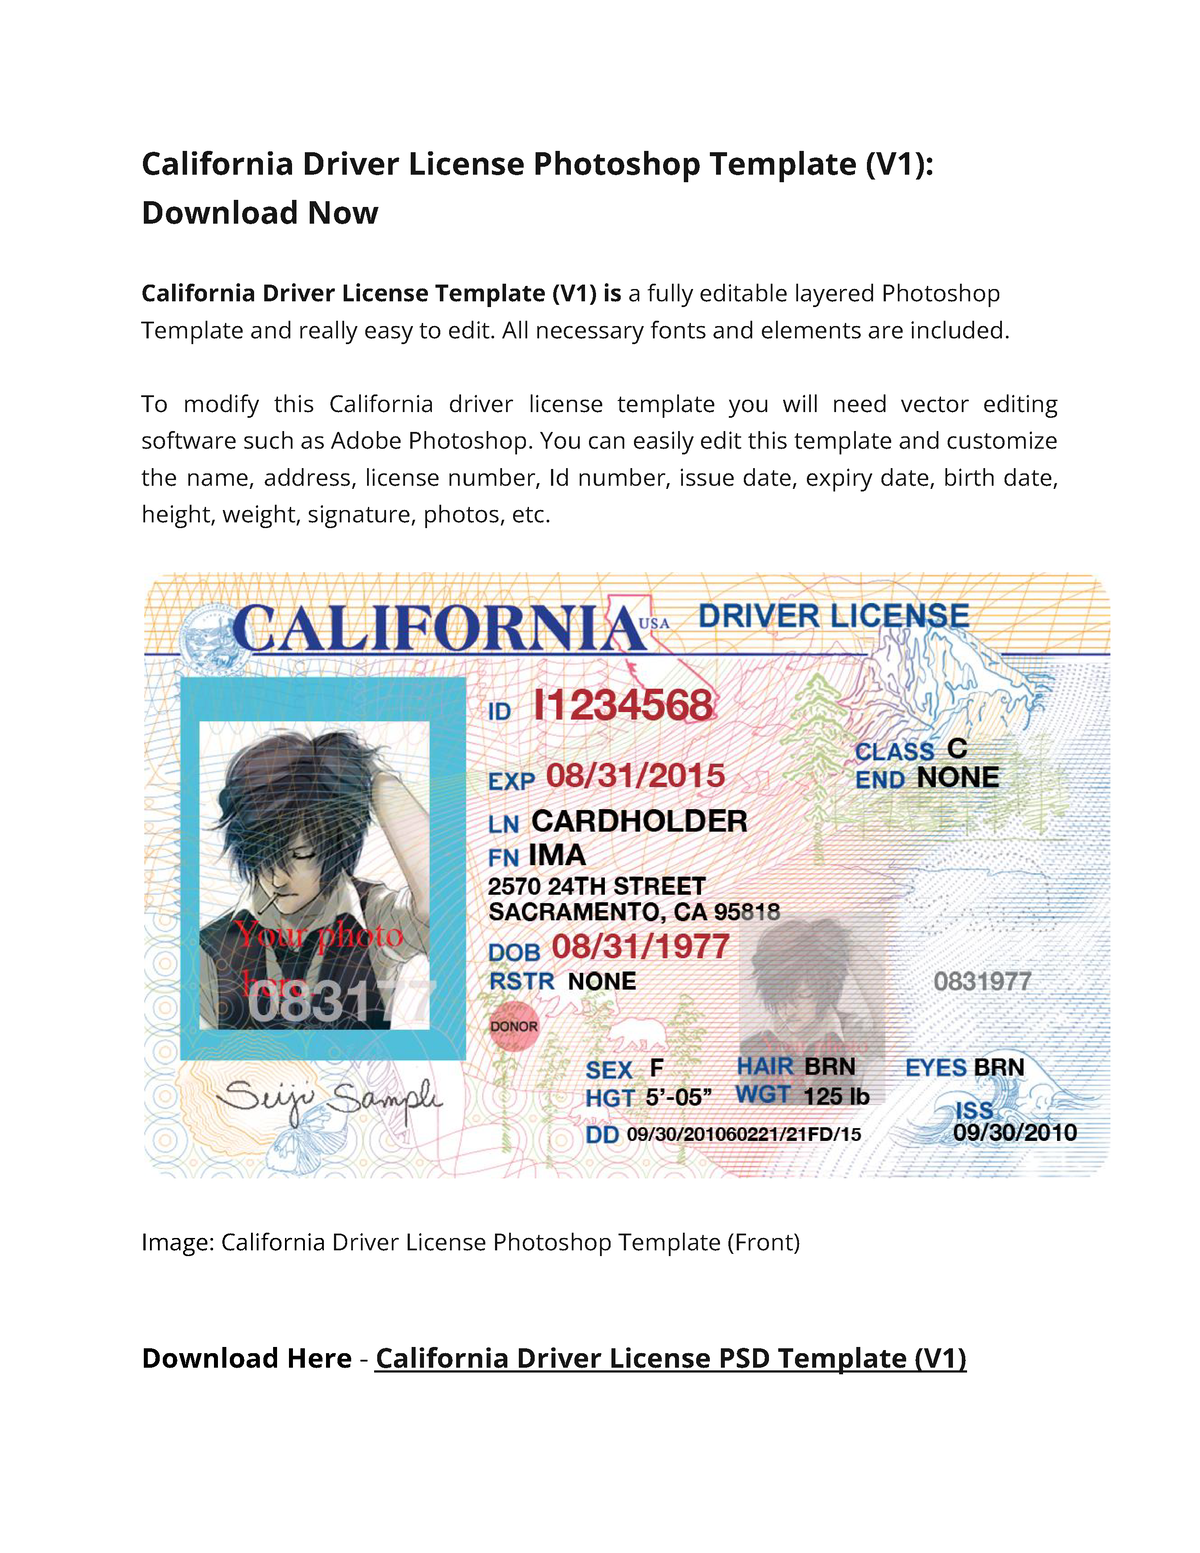 california-driver-license-template-v1-california-driver-license-photoshop-template-v1